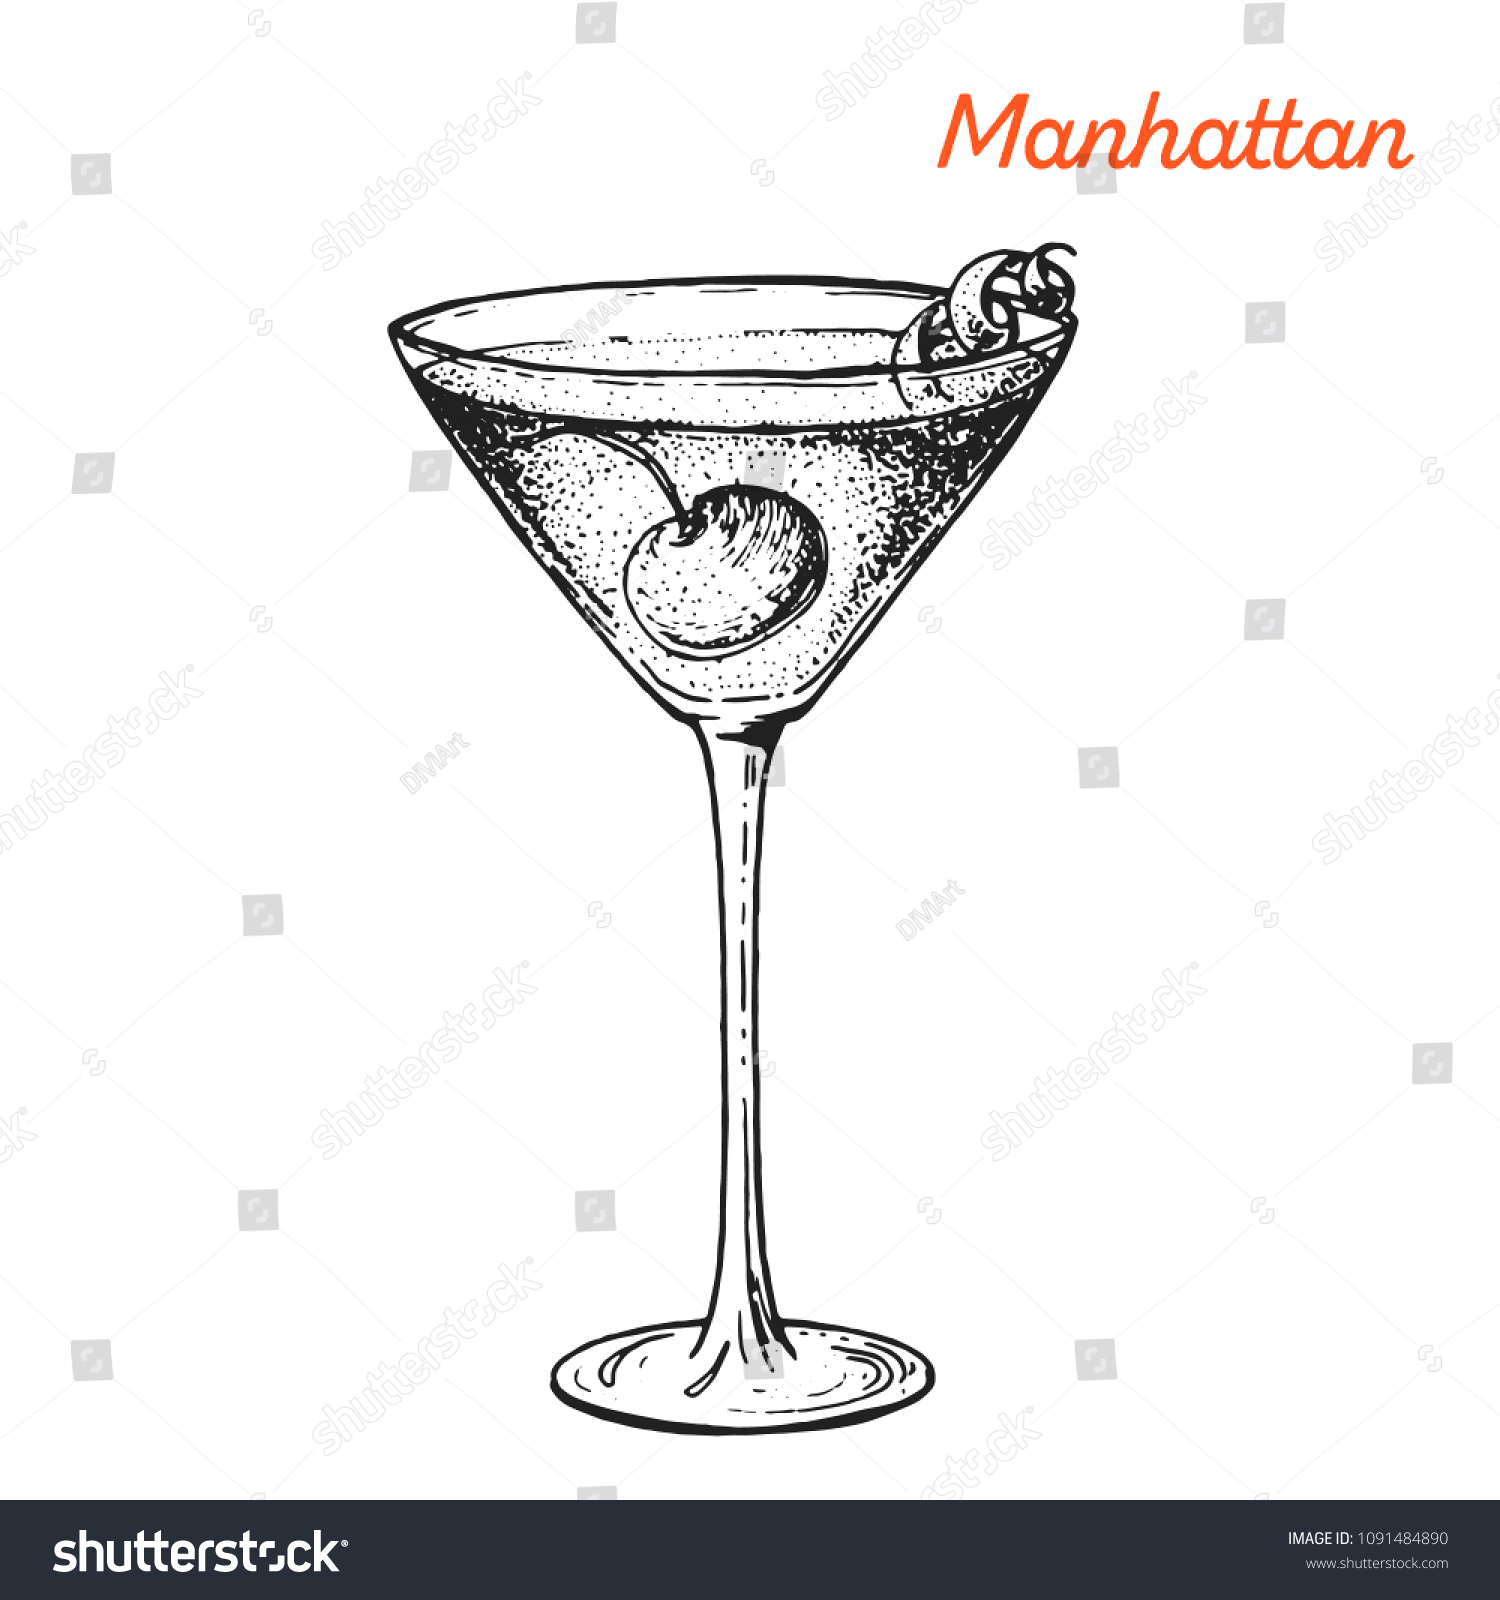 Manhattan Cocktail Illustration Alcoholic Cocktails Hand Stock Vector Royalty Free 1091484890,Pulled Pork Tenderloin Slow Cooker